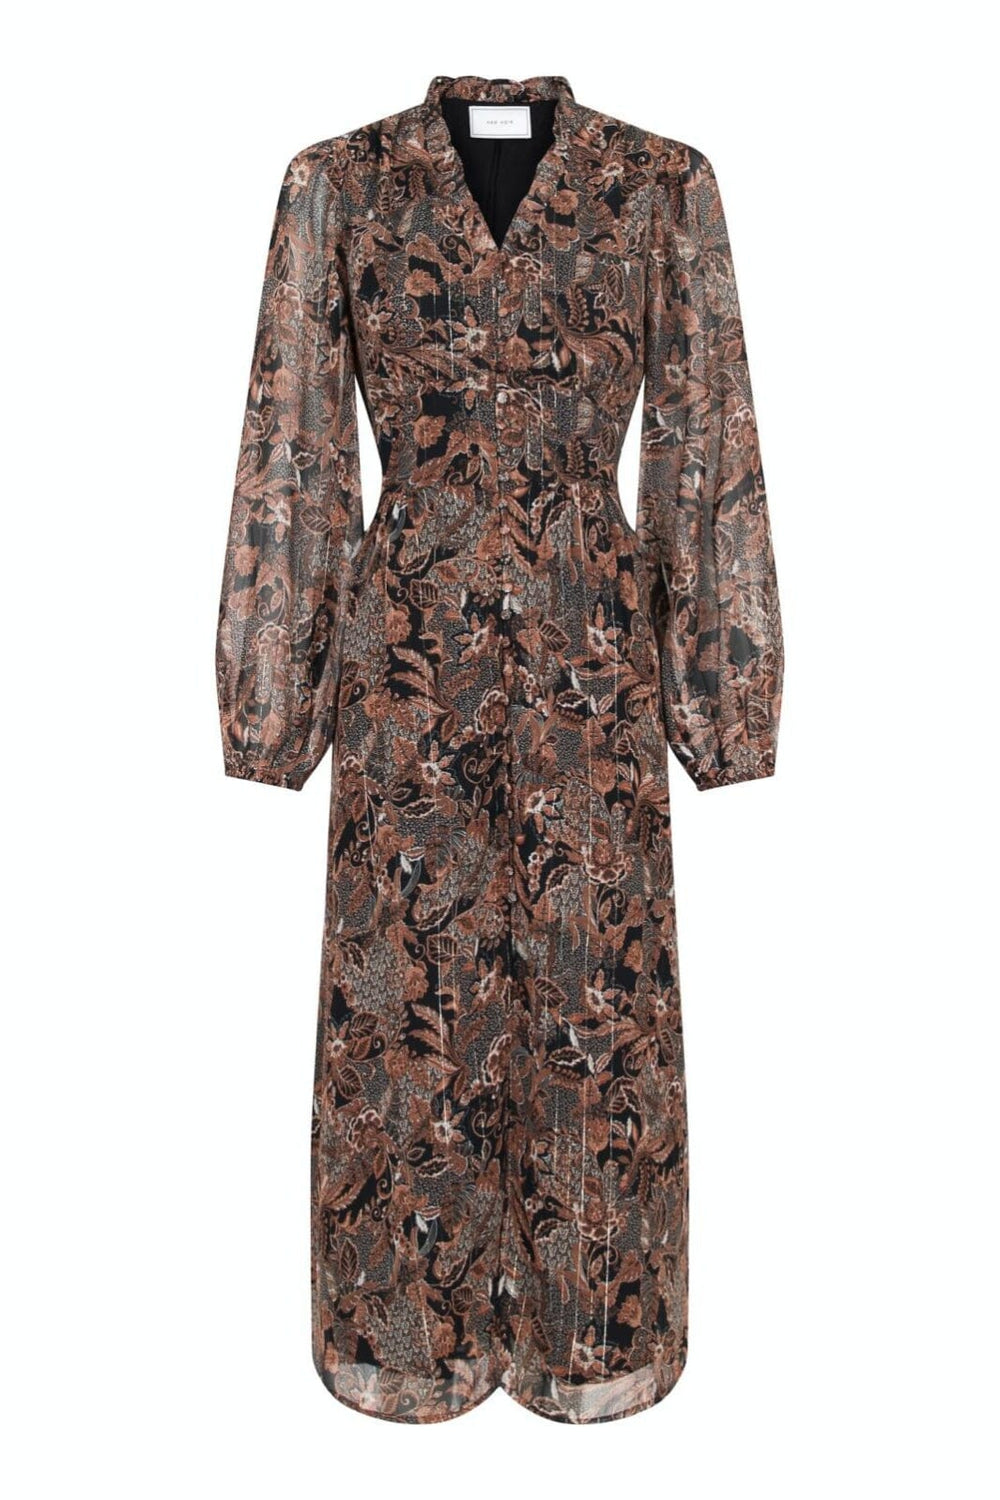 Neo Noir - Nimes Forest Field Dress - Copper Brown Kjoler 